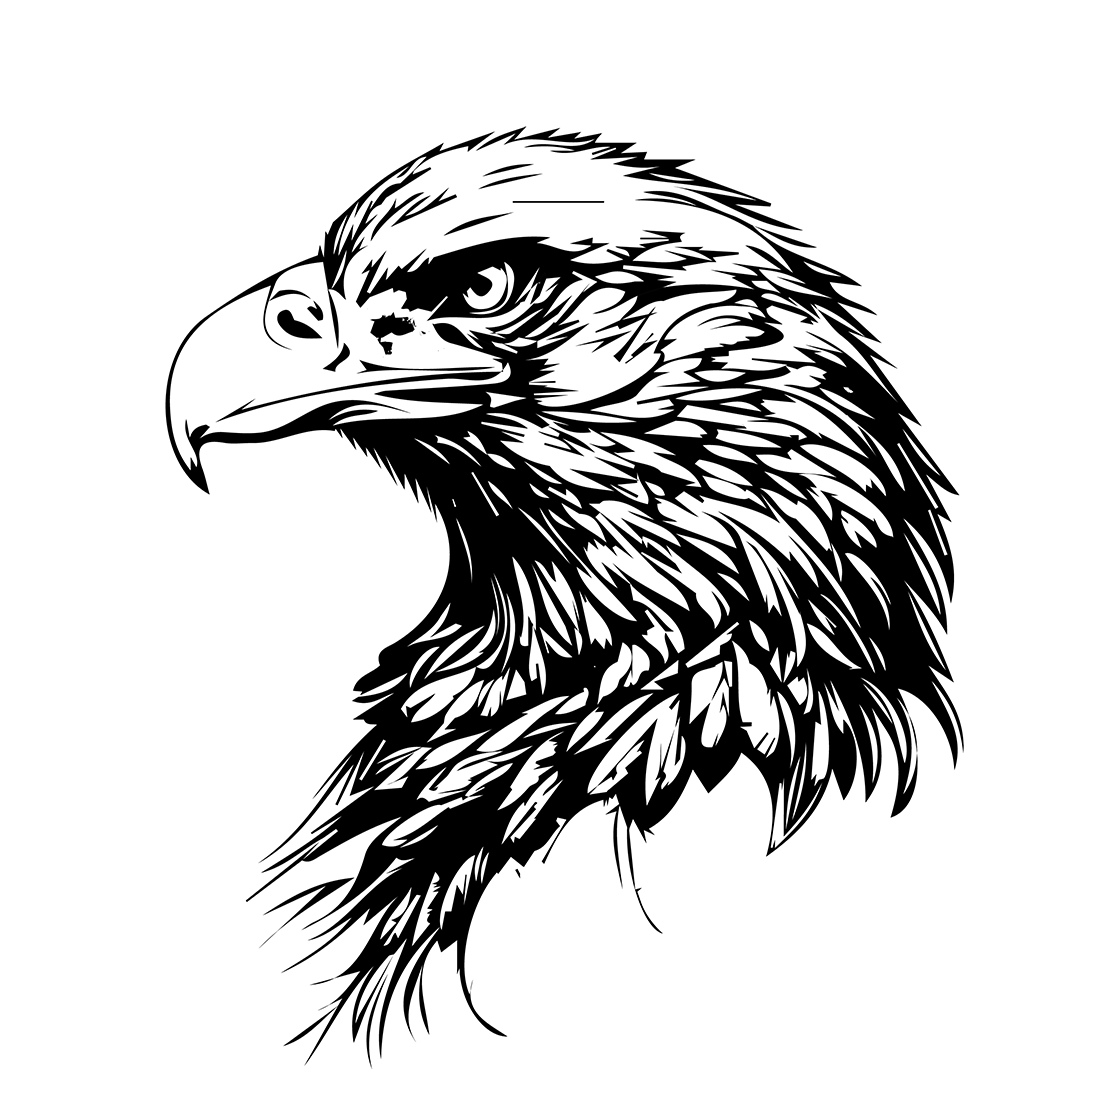 Eagle logo preview image.